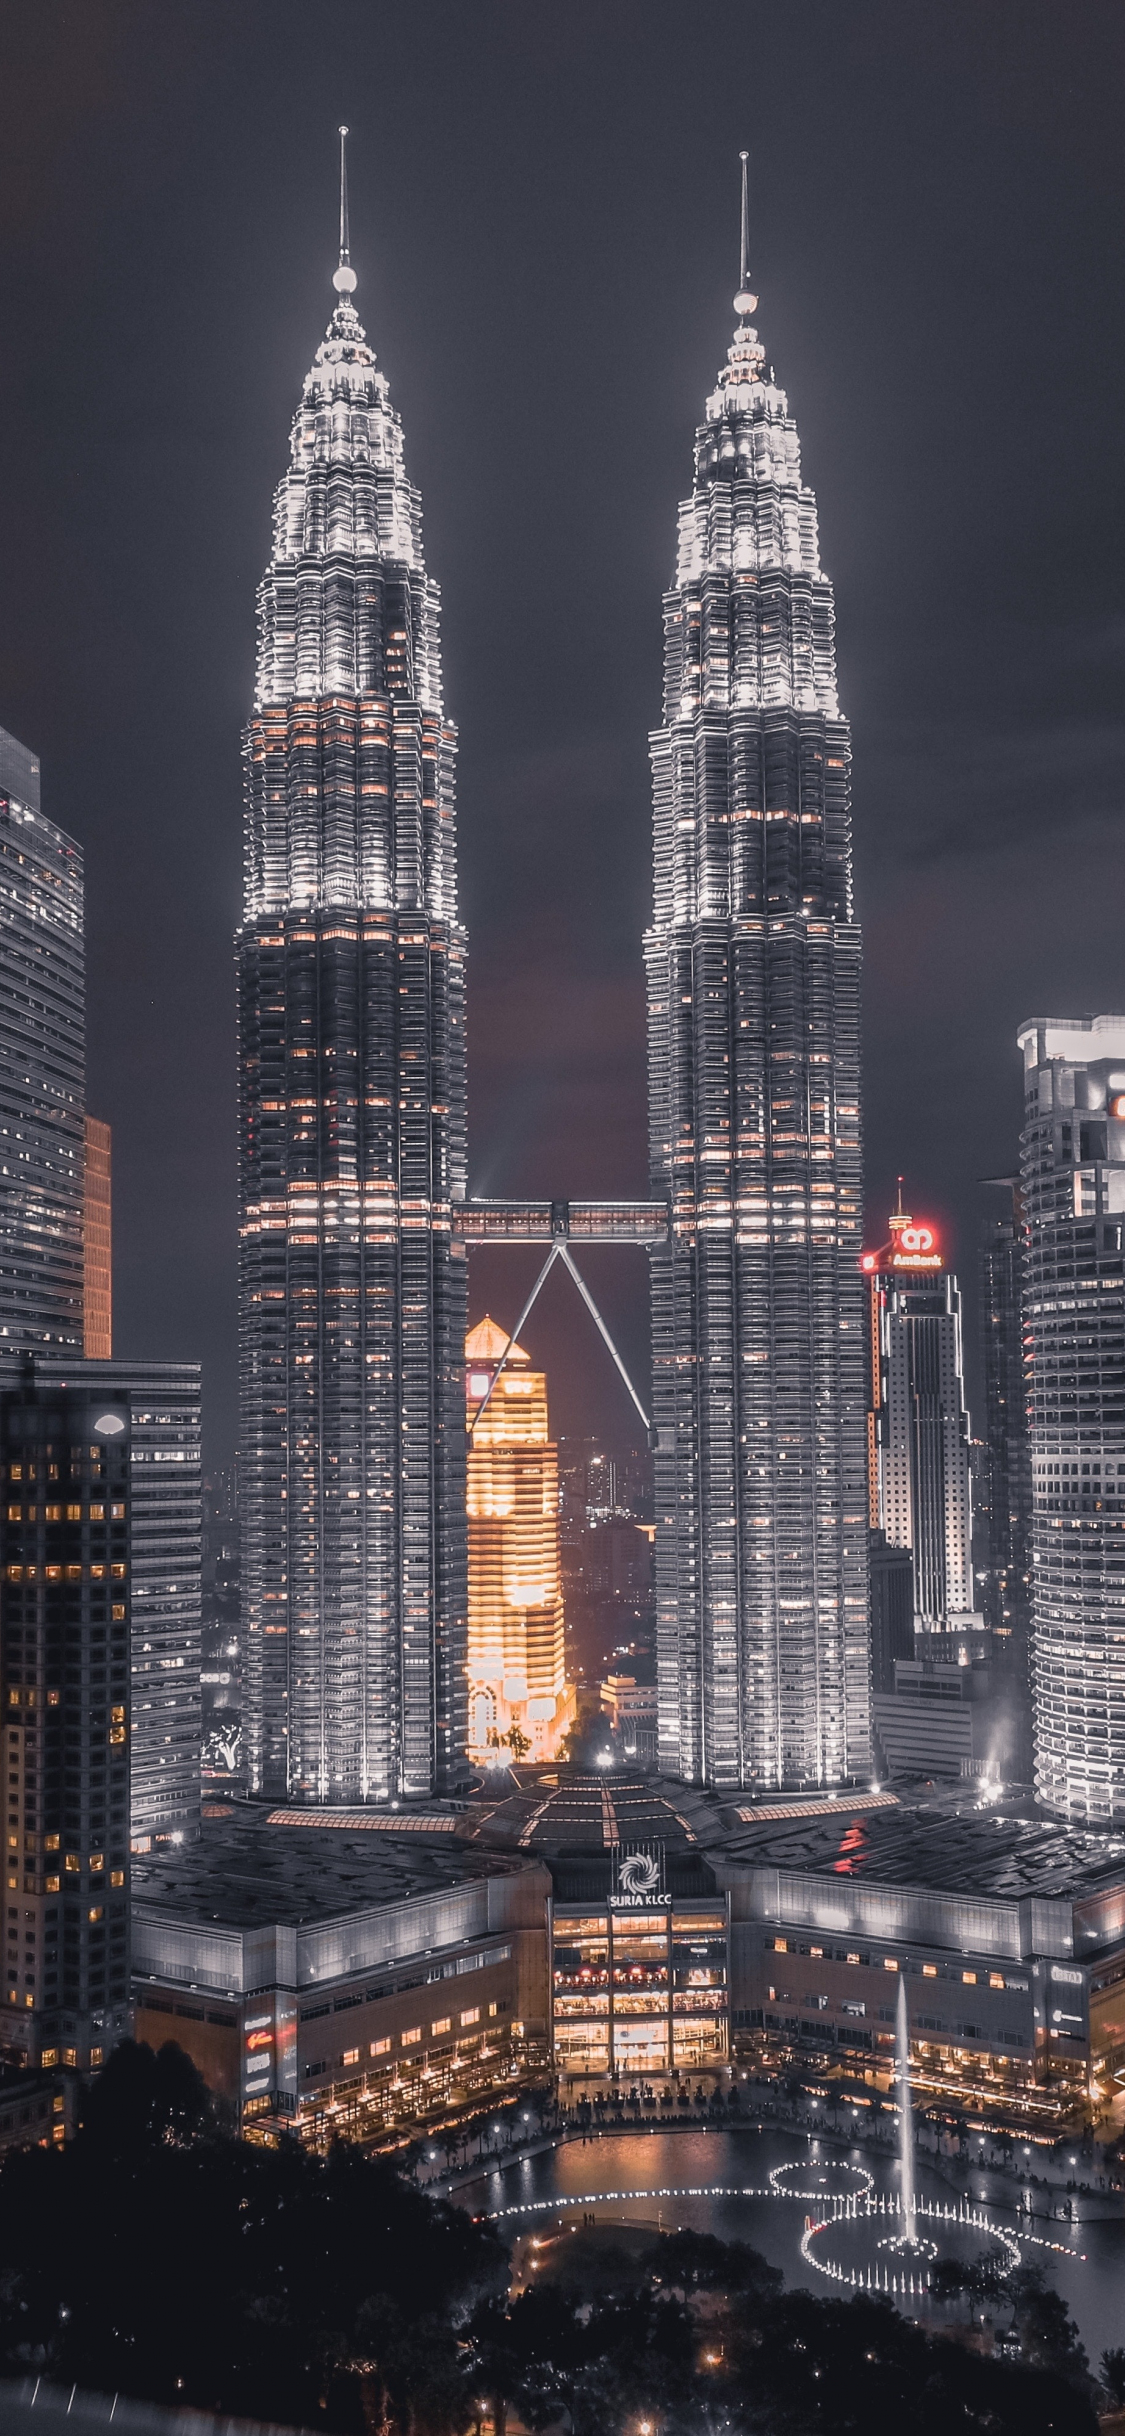 Download Nighttime View of the Kuala Lumpur Skyline Wallpaper | Wallpapers .com